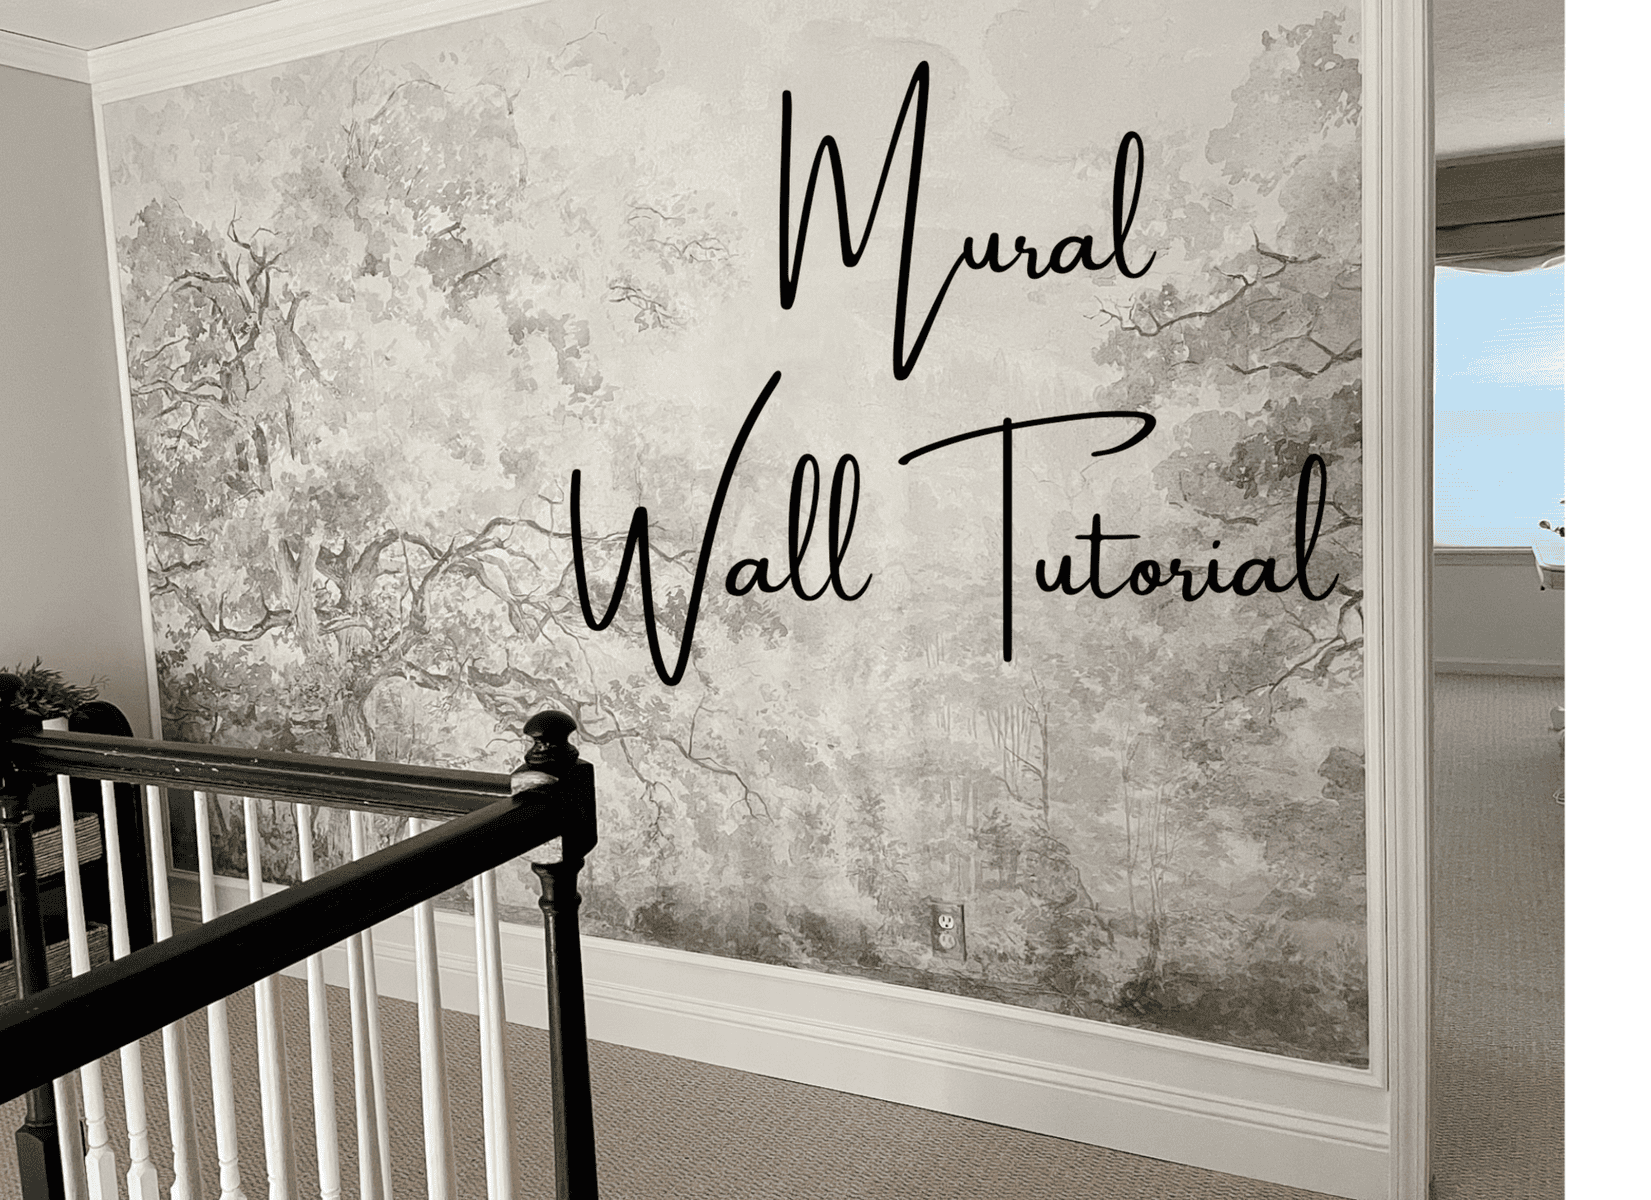 mural wall tutorial